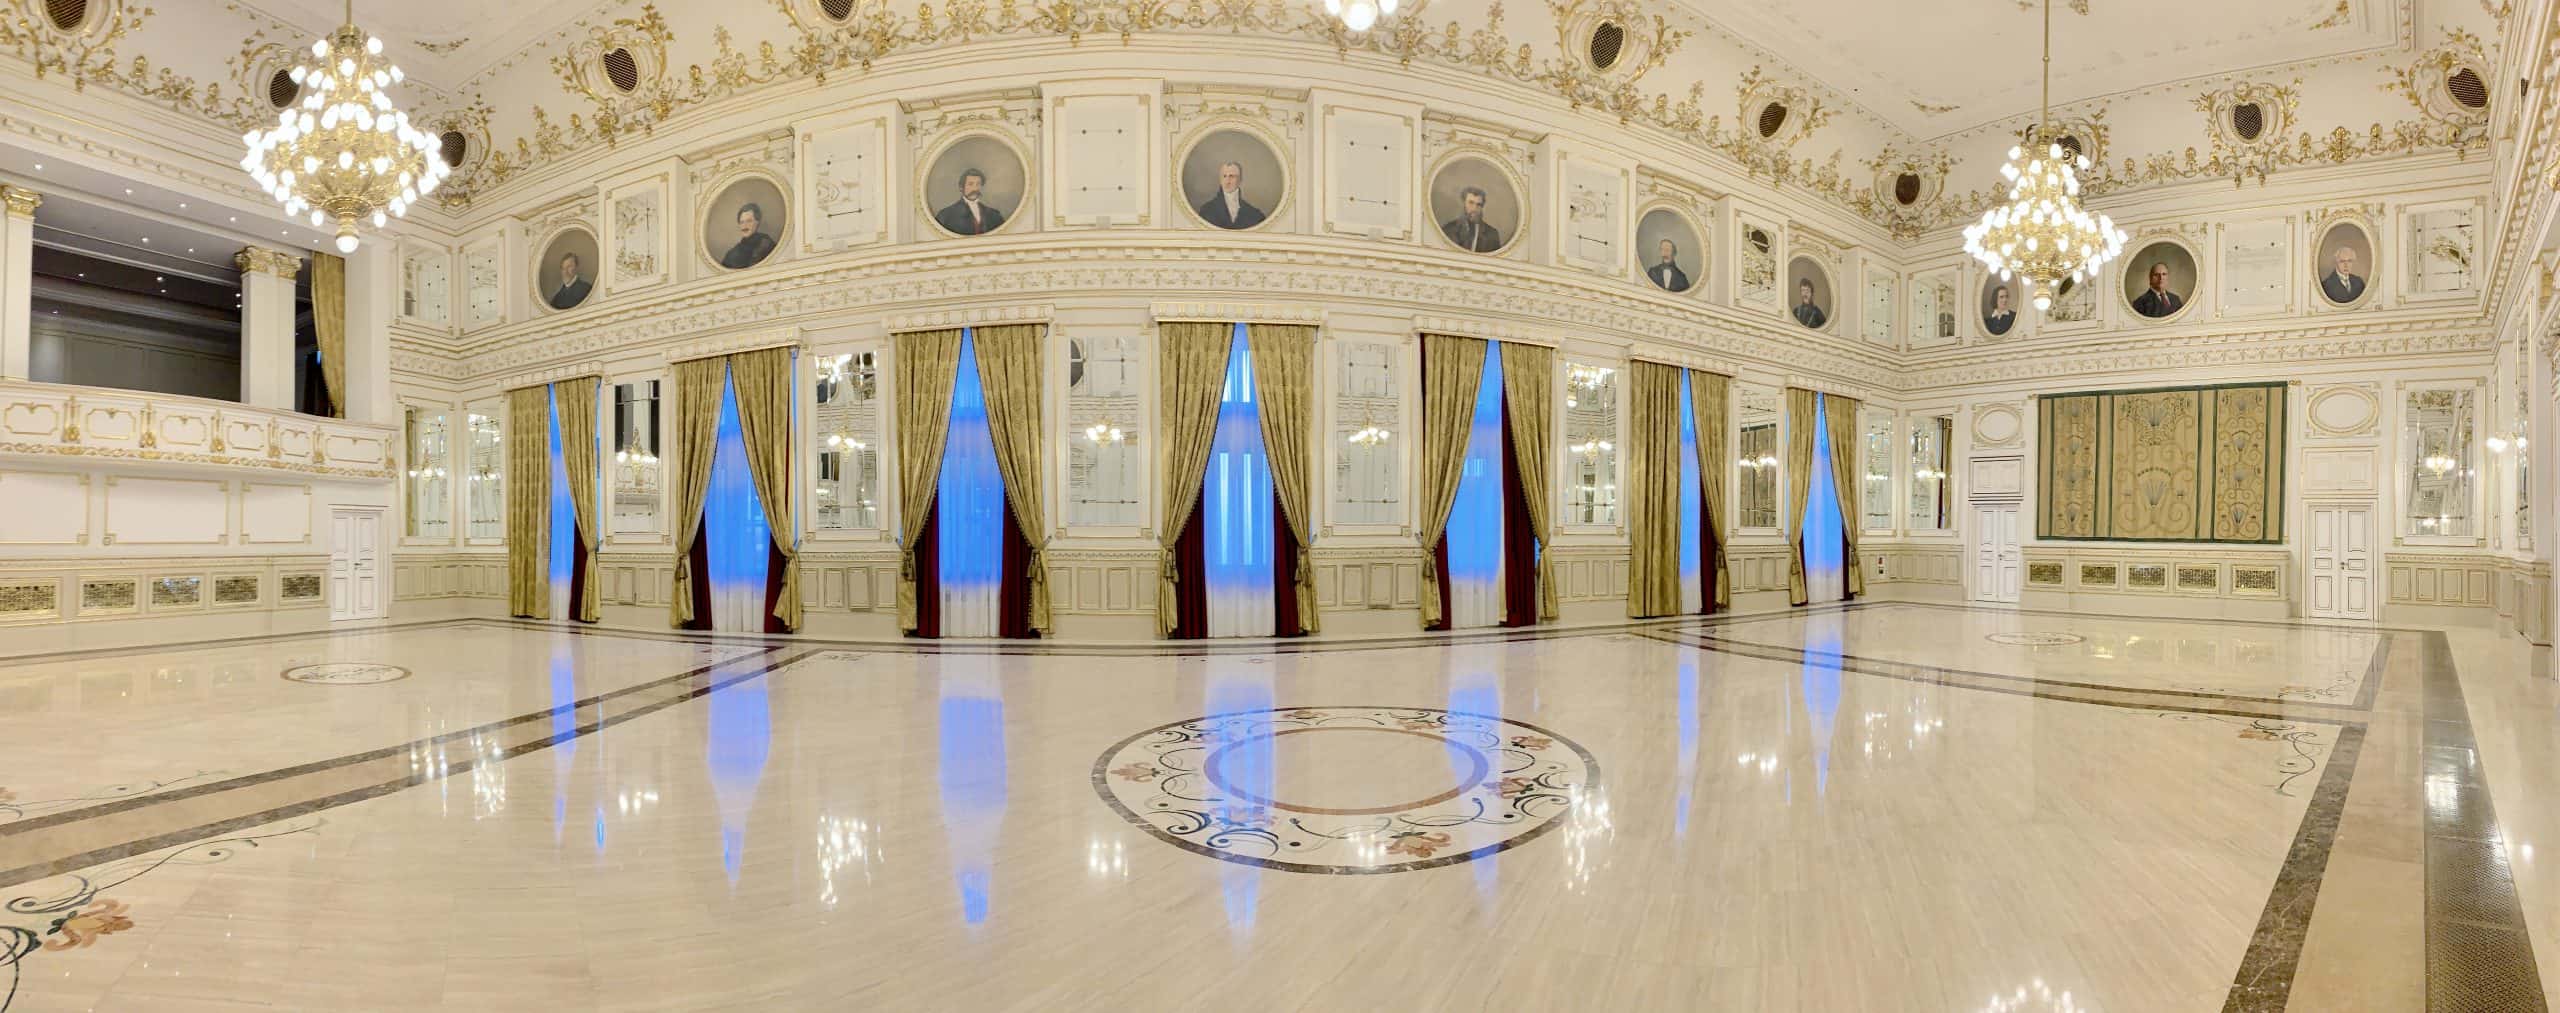 the grand ballroom at the Corinthia Budapest